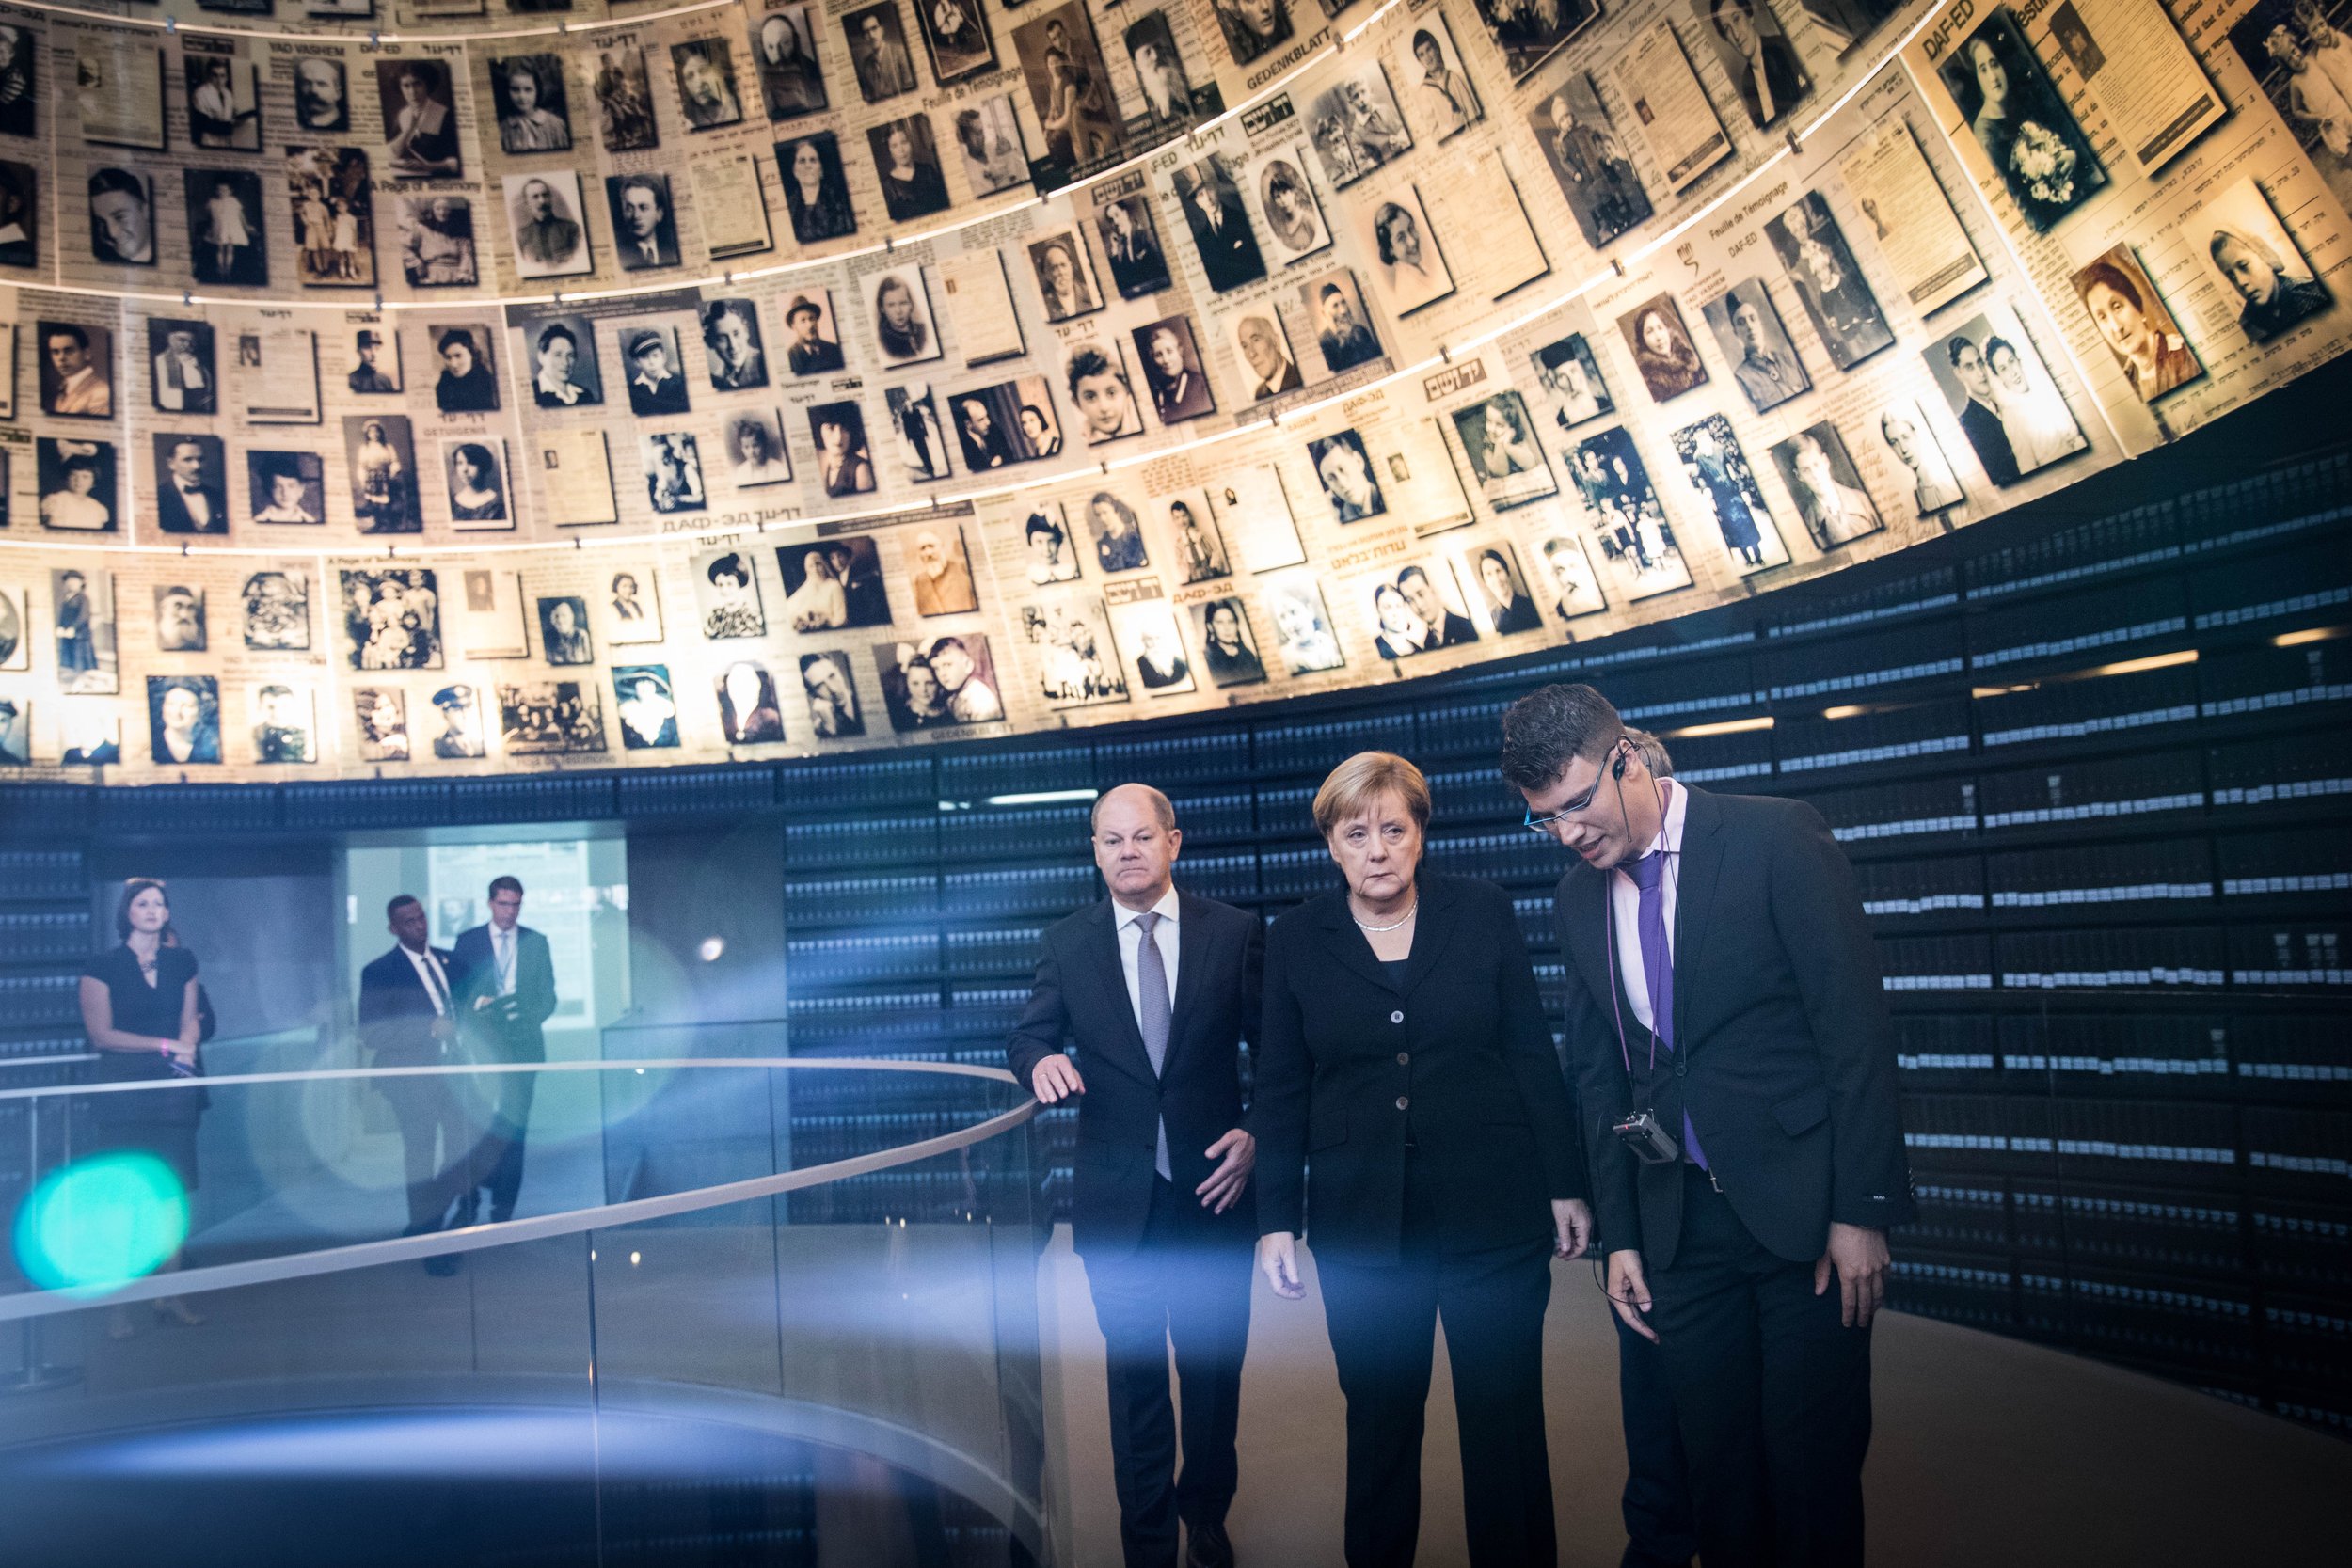  German Chancellor Angela Merkel at the Hall of Names during her visit at the Yad Vashem Holocaust memorial in Jerusalem on October 4, 2018 